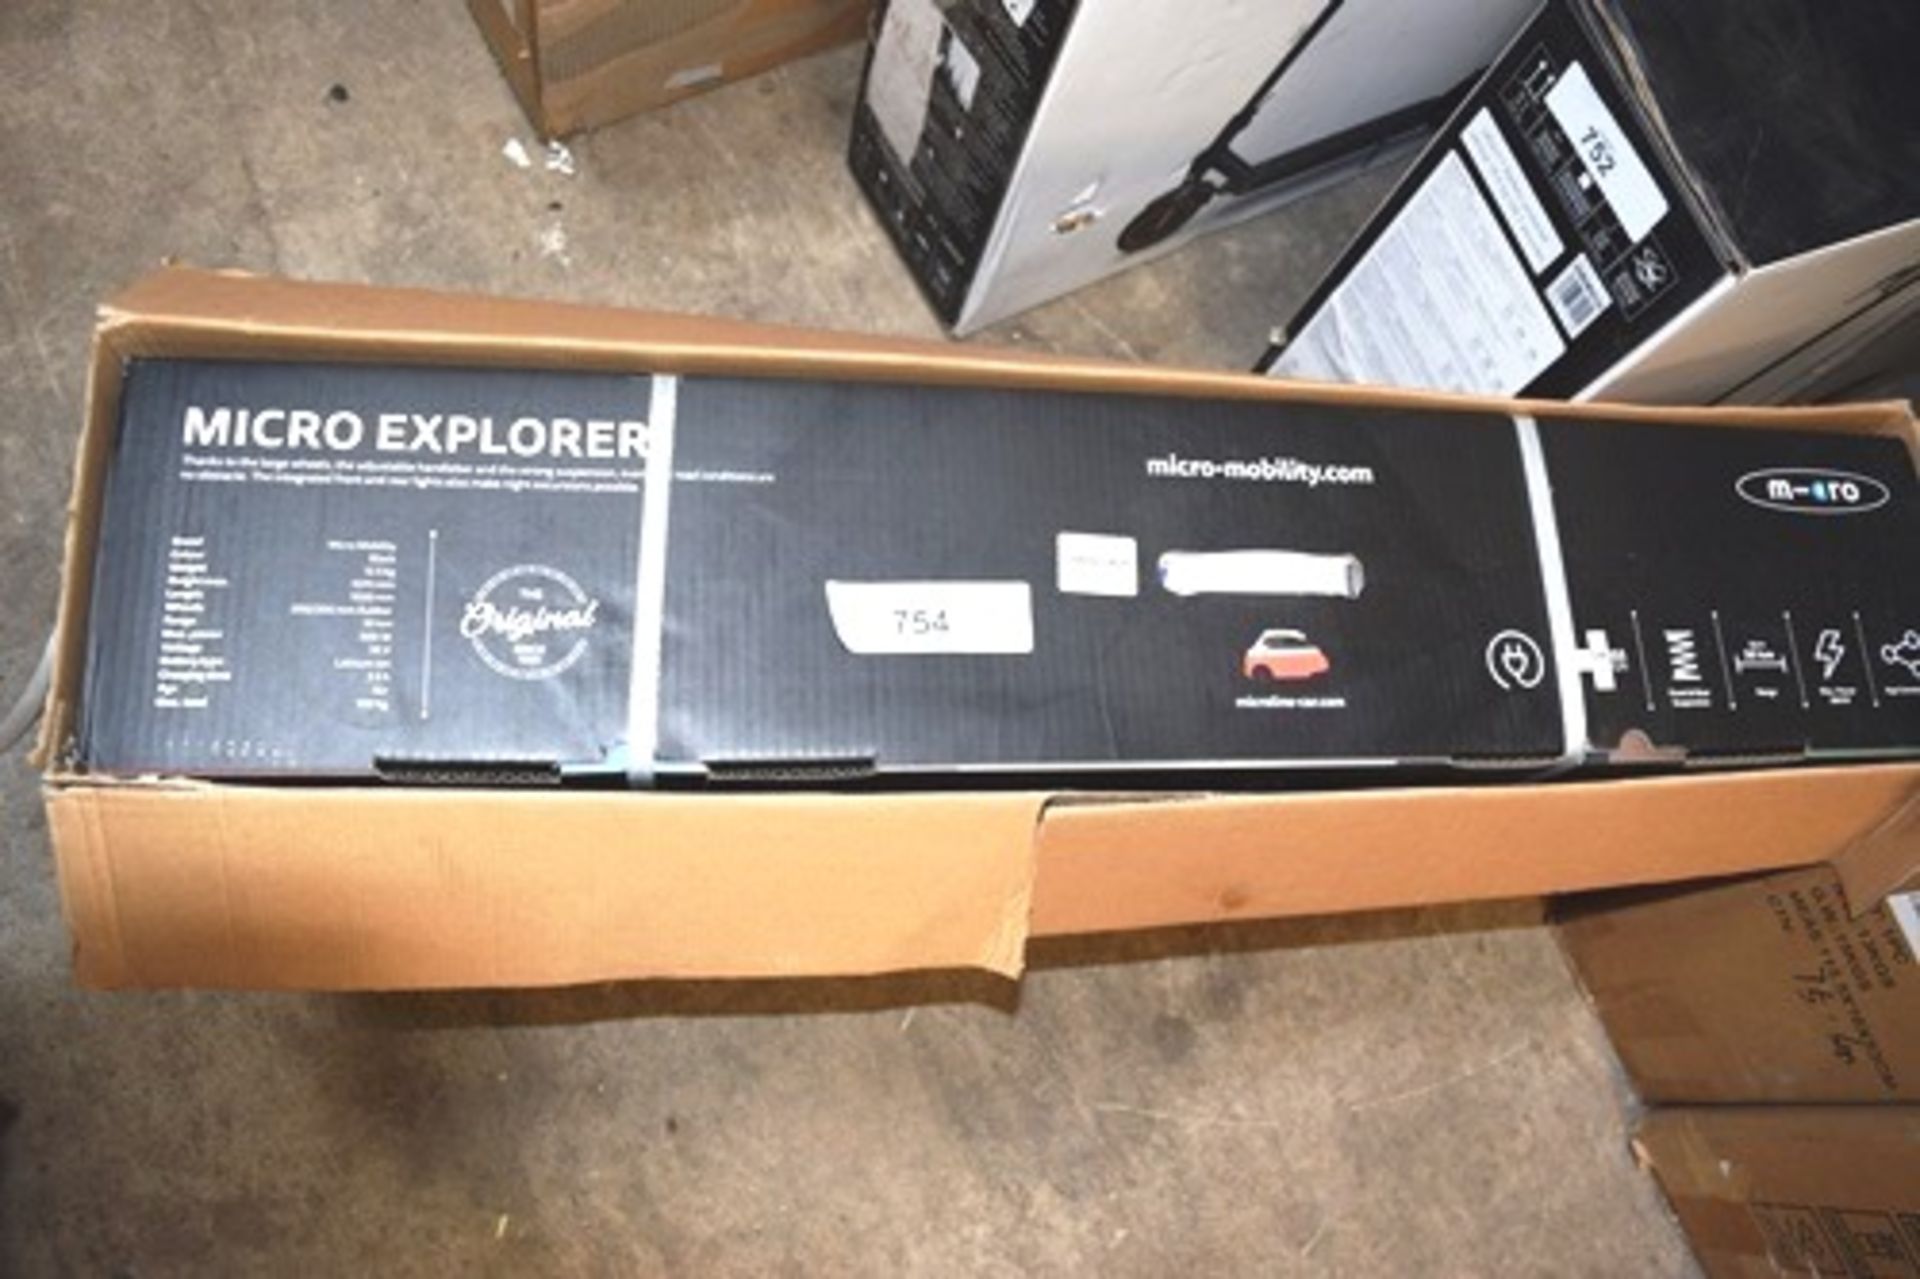 1 x black M-Cro micro explorer scooter, model EM0038, 36V - Sealed new in box (GS16)